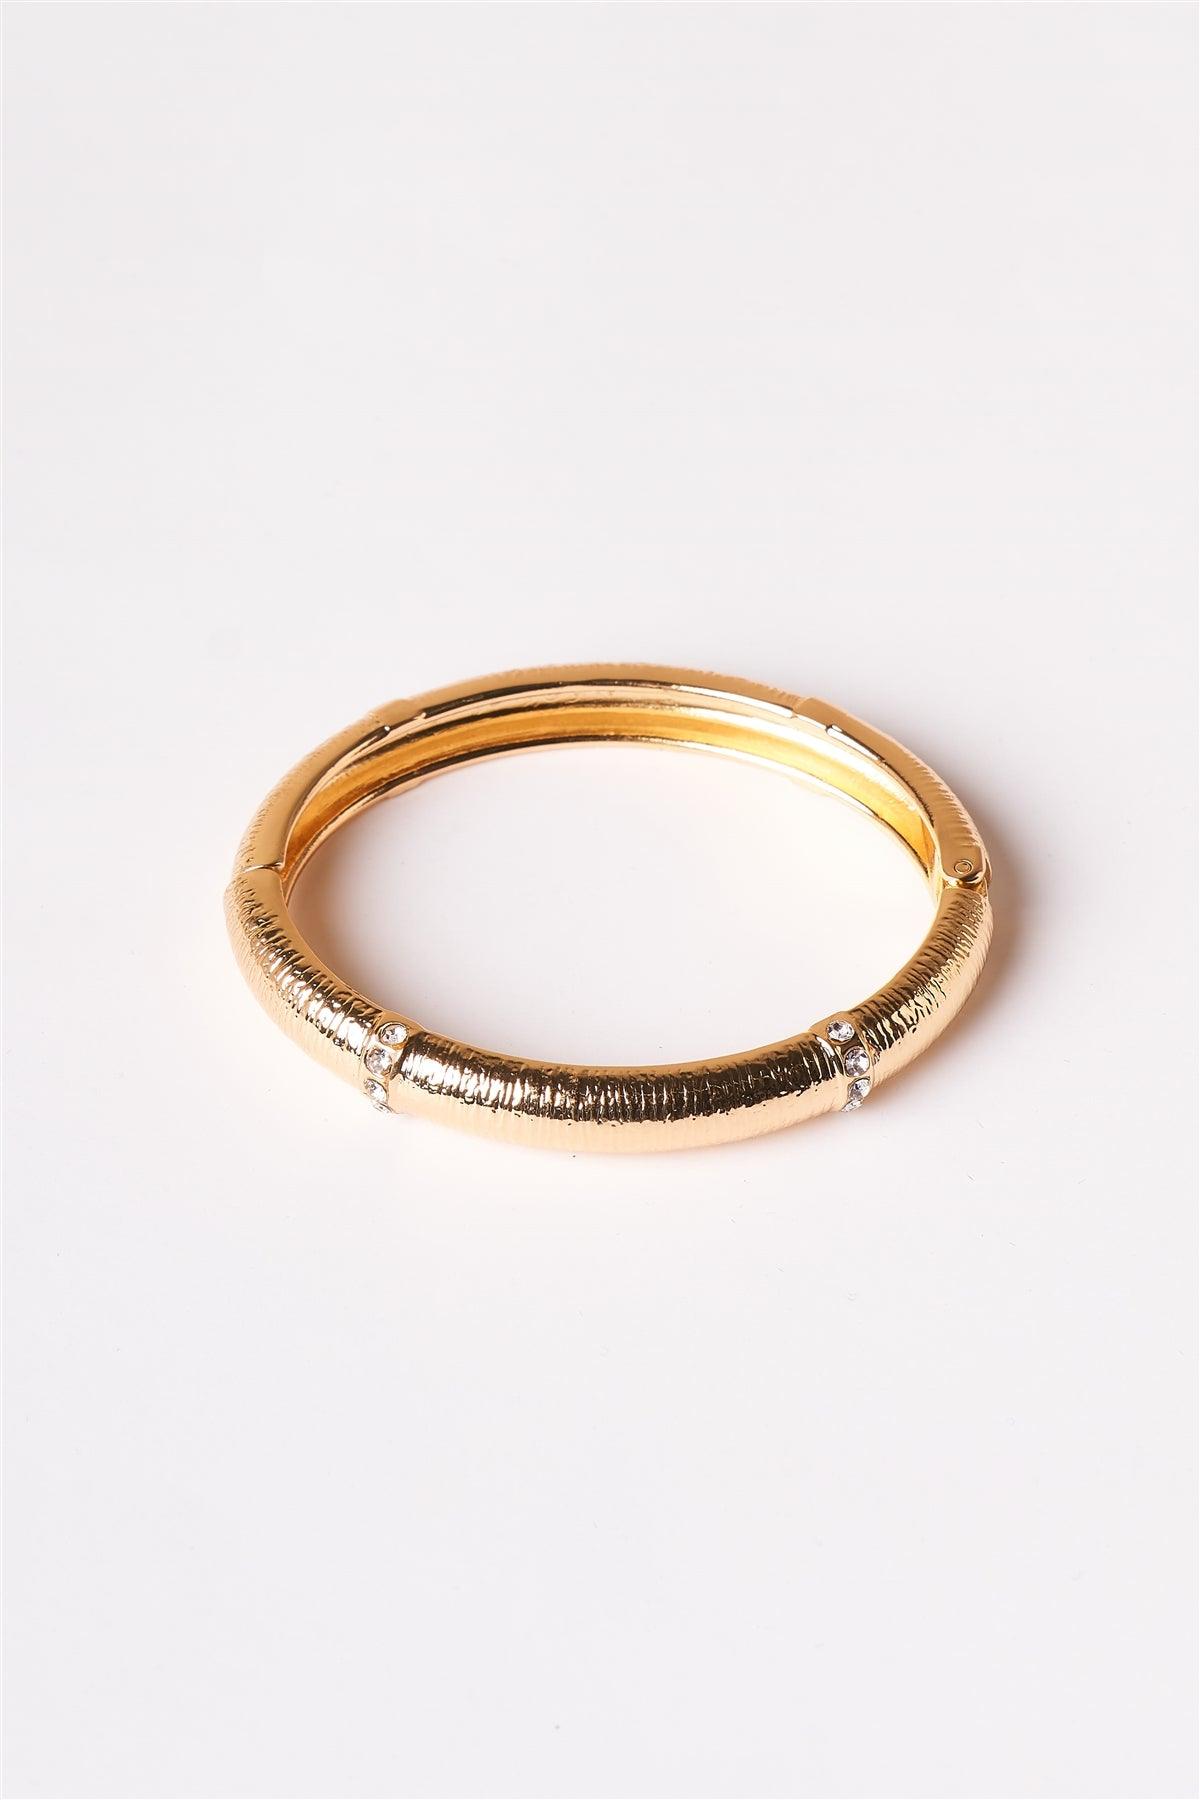 Gold Textured Metal Bangle Bracelet /1 Piece